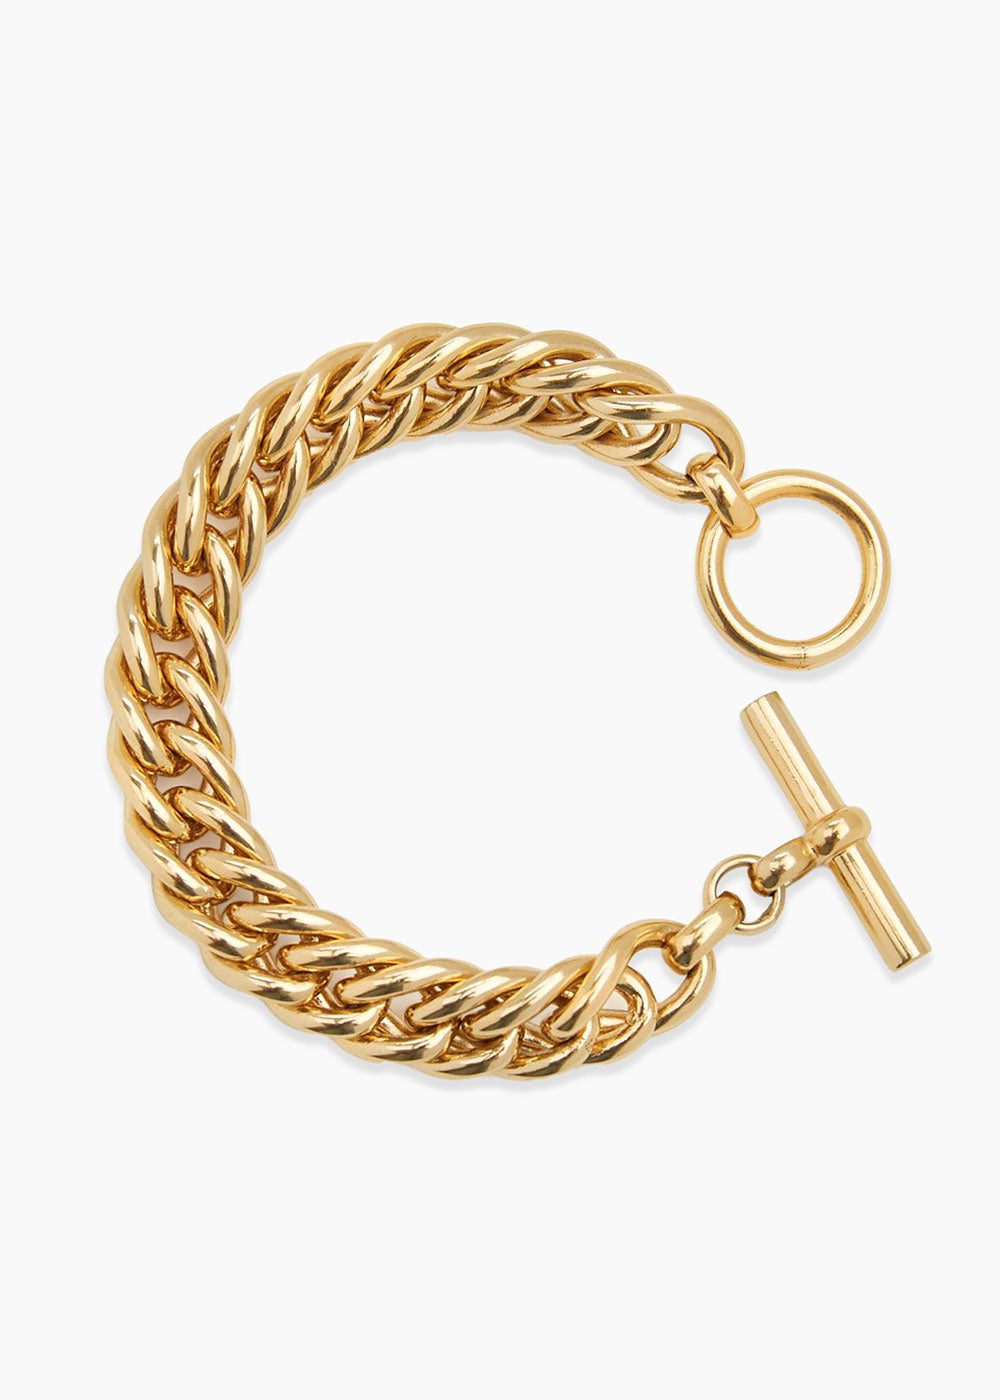 tilly-sveaas-medium-gold-curb-link-bracelet